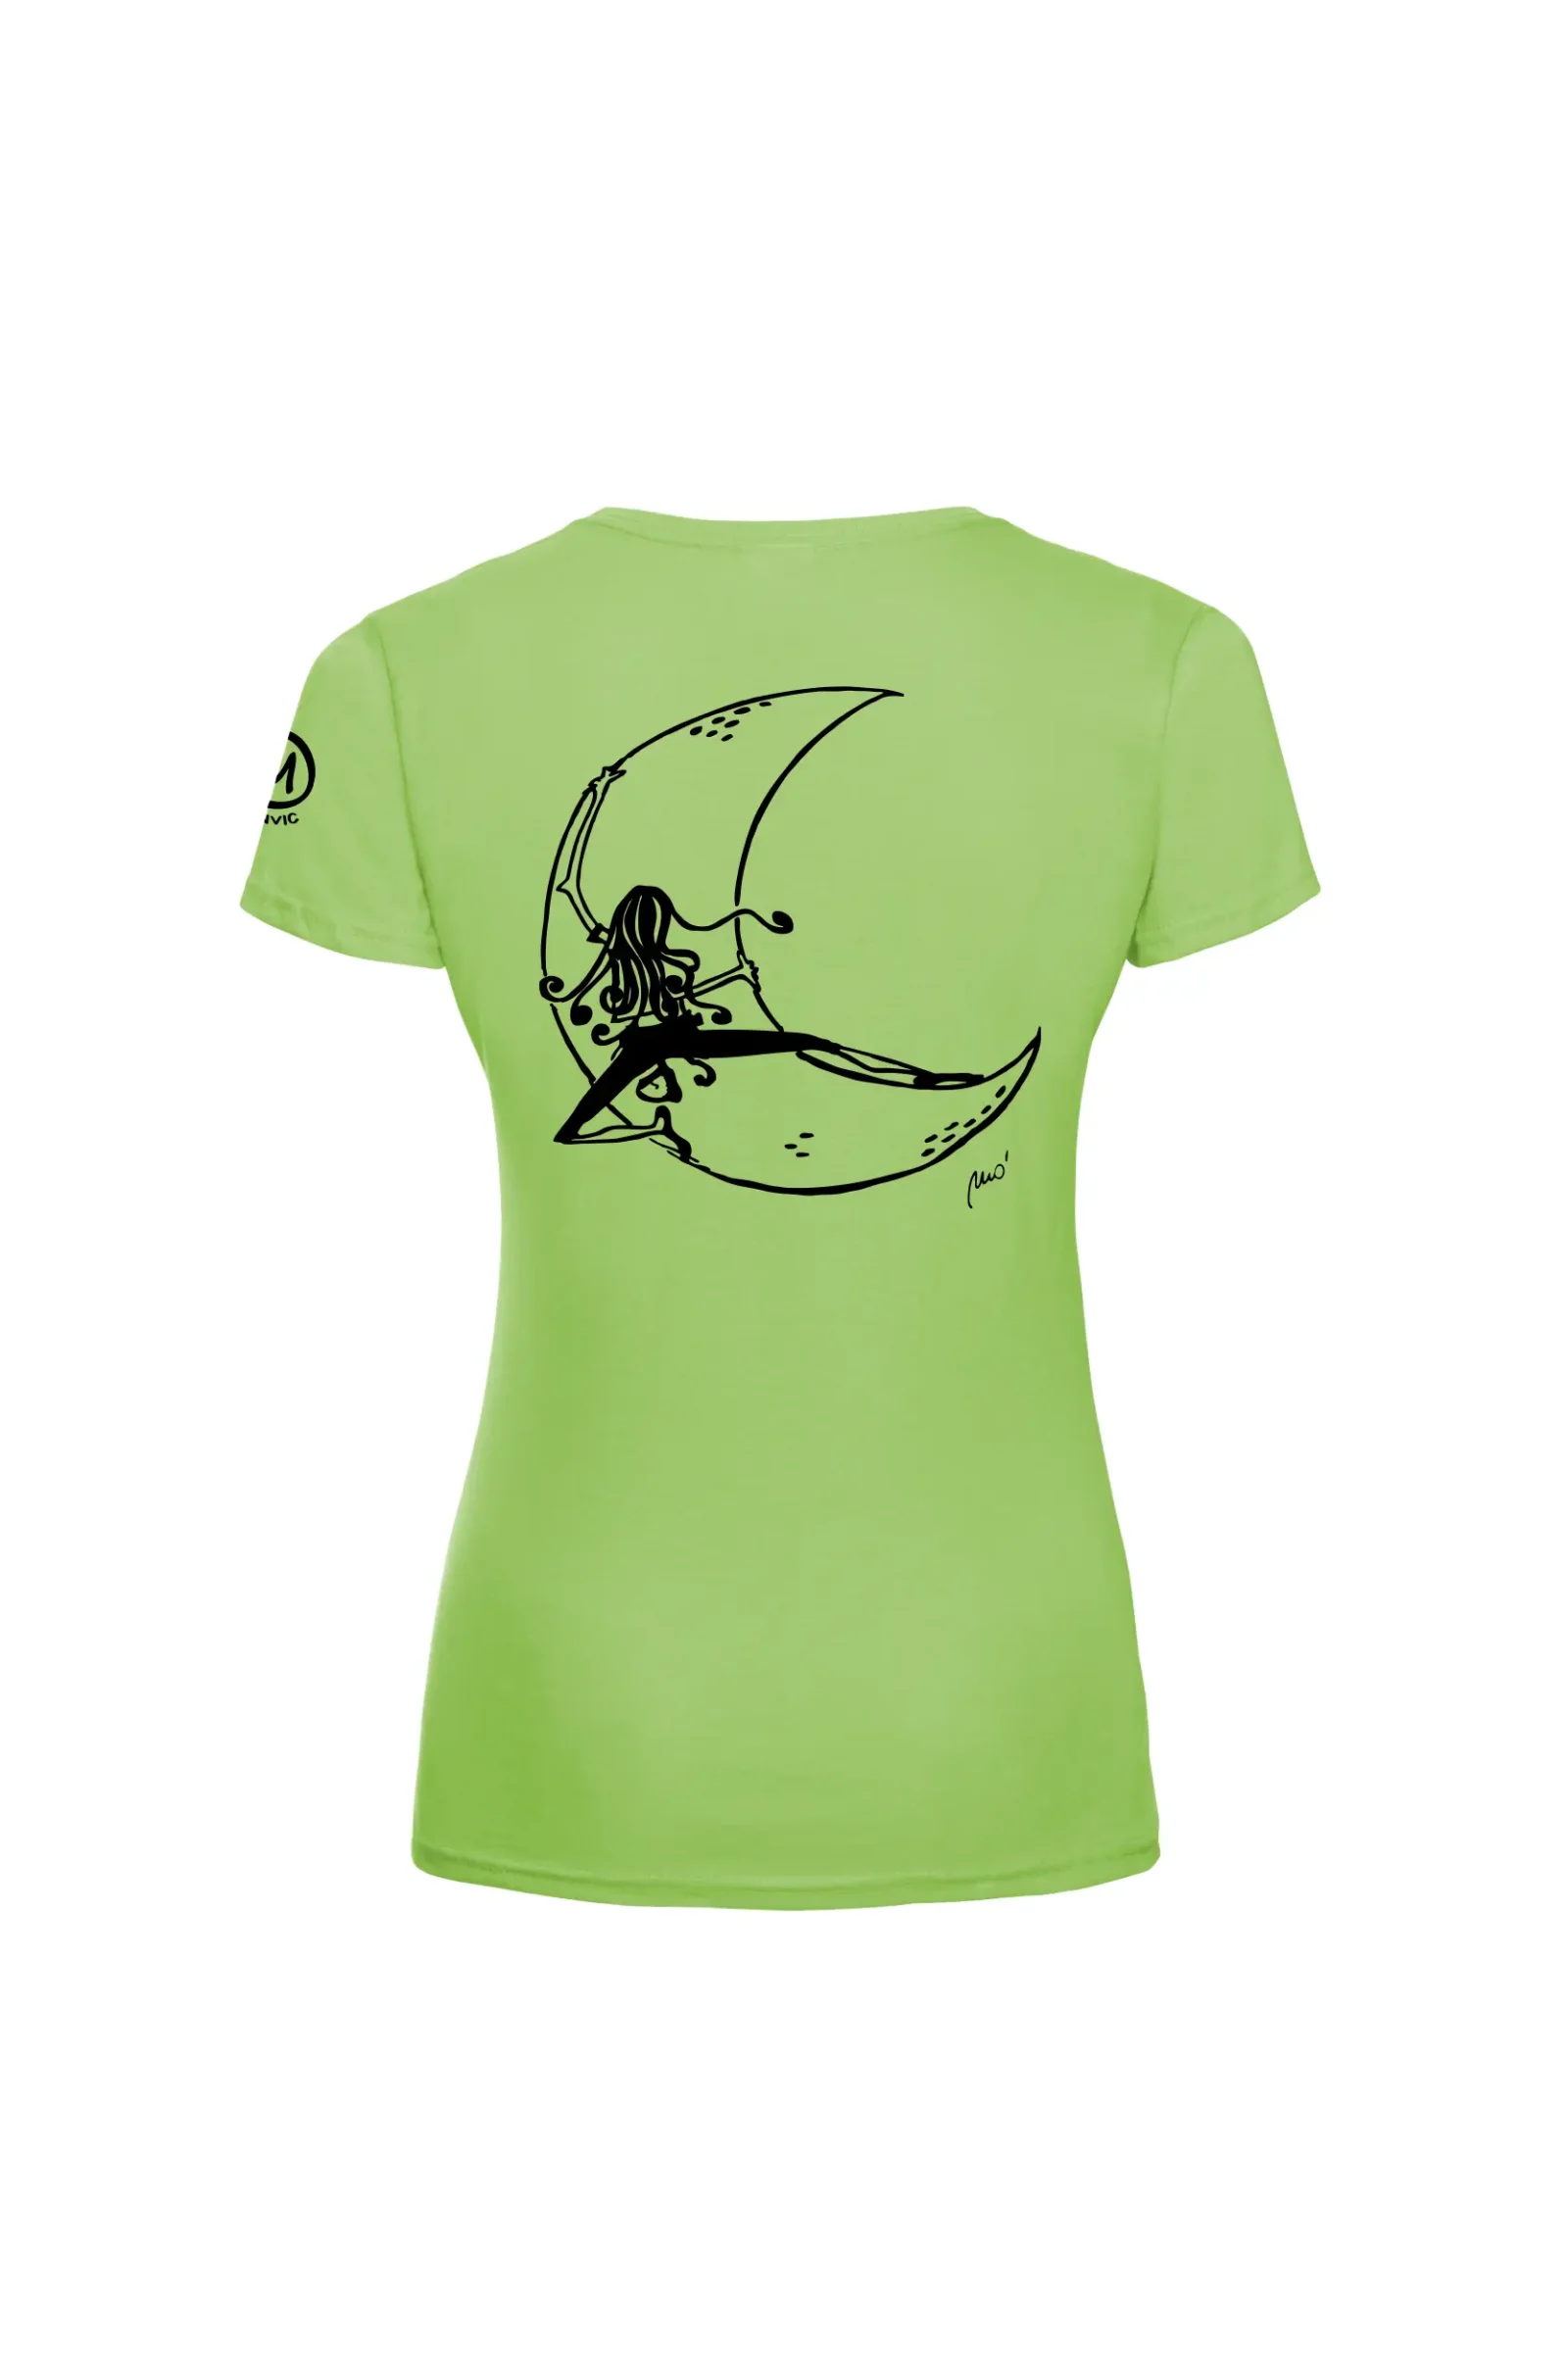 T-shirt escalade femme - coton vert anis - "Moon" SHARON by MONVIC